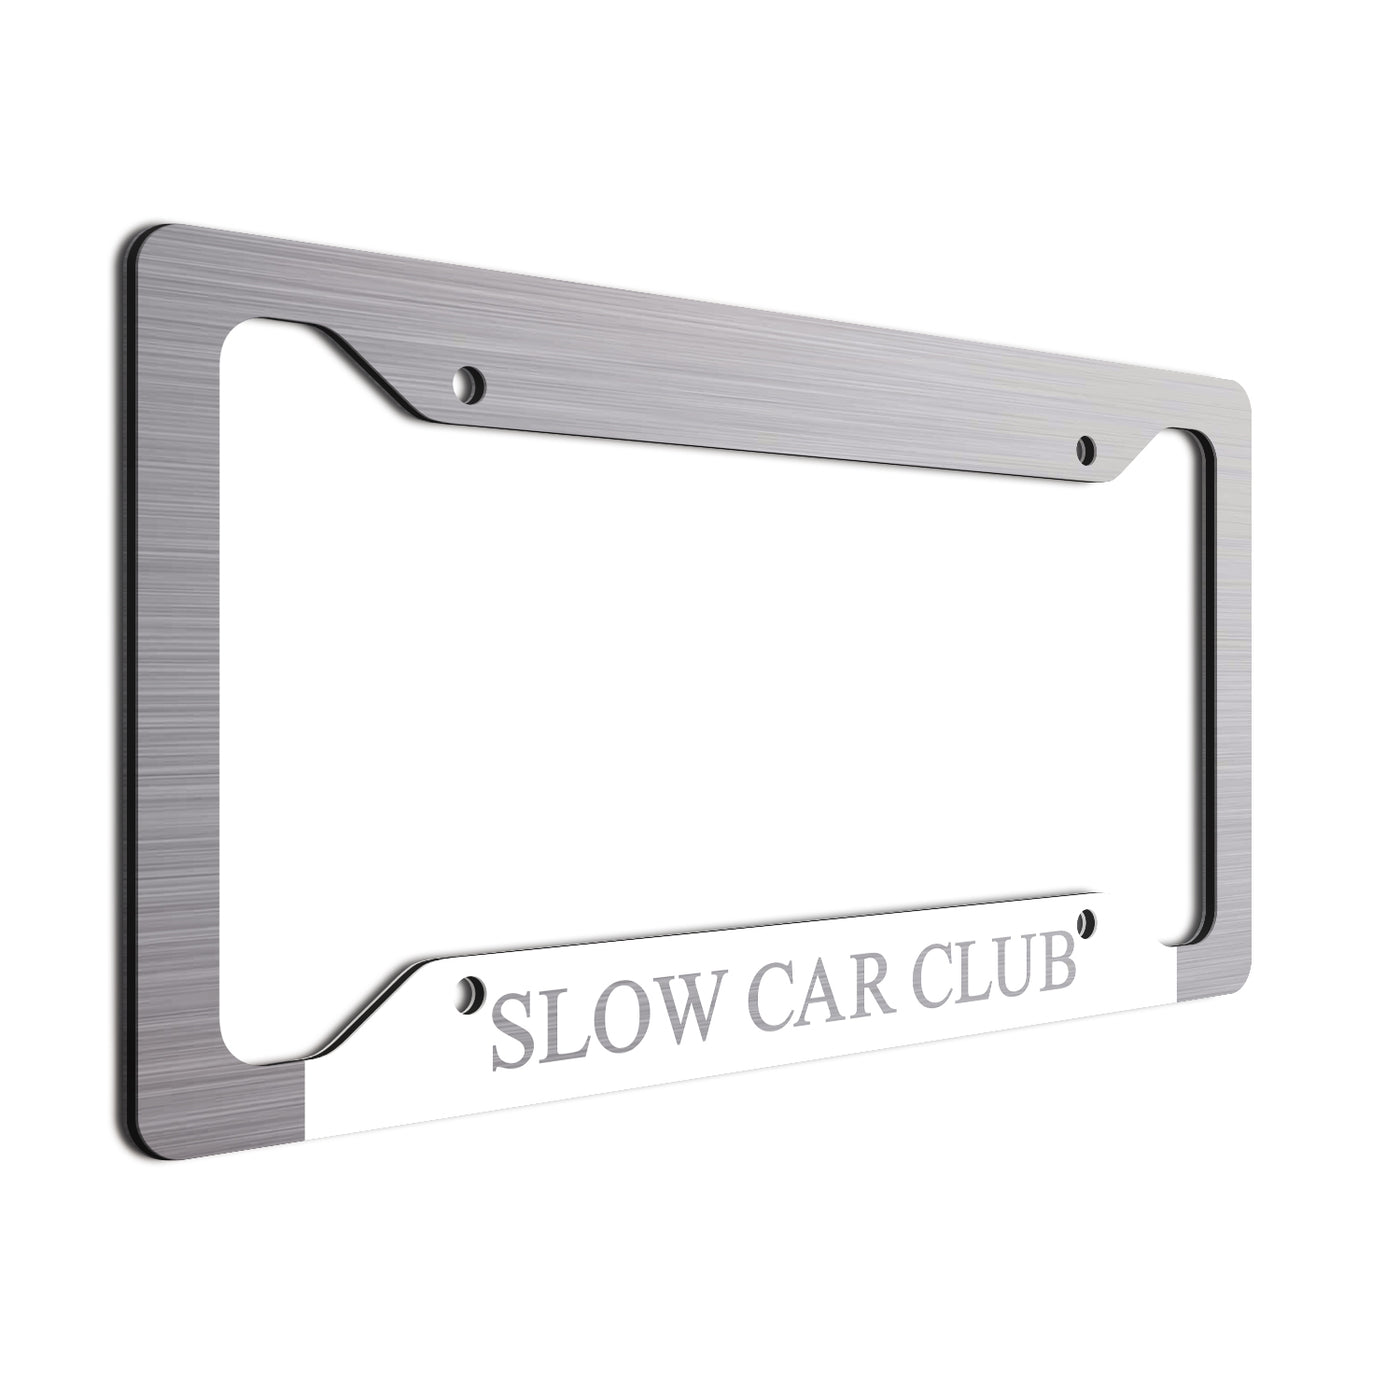 Slow Car Club| License Plate Frame| Fun Vanity Plate Frame